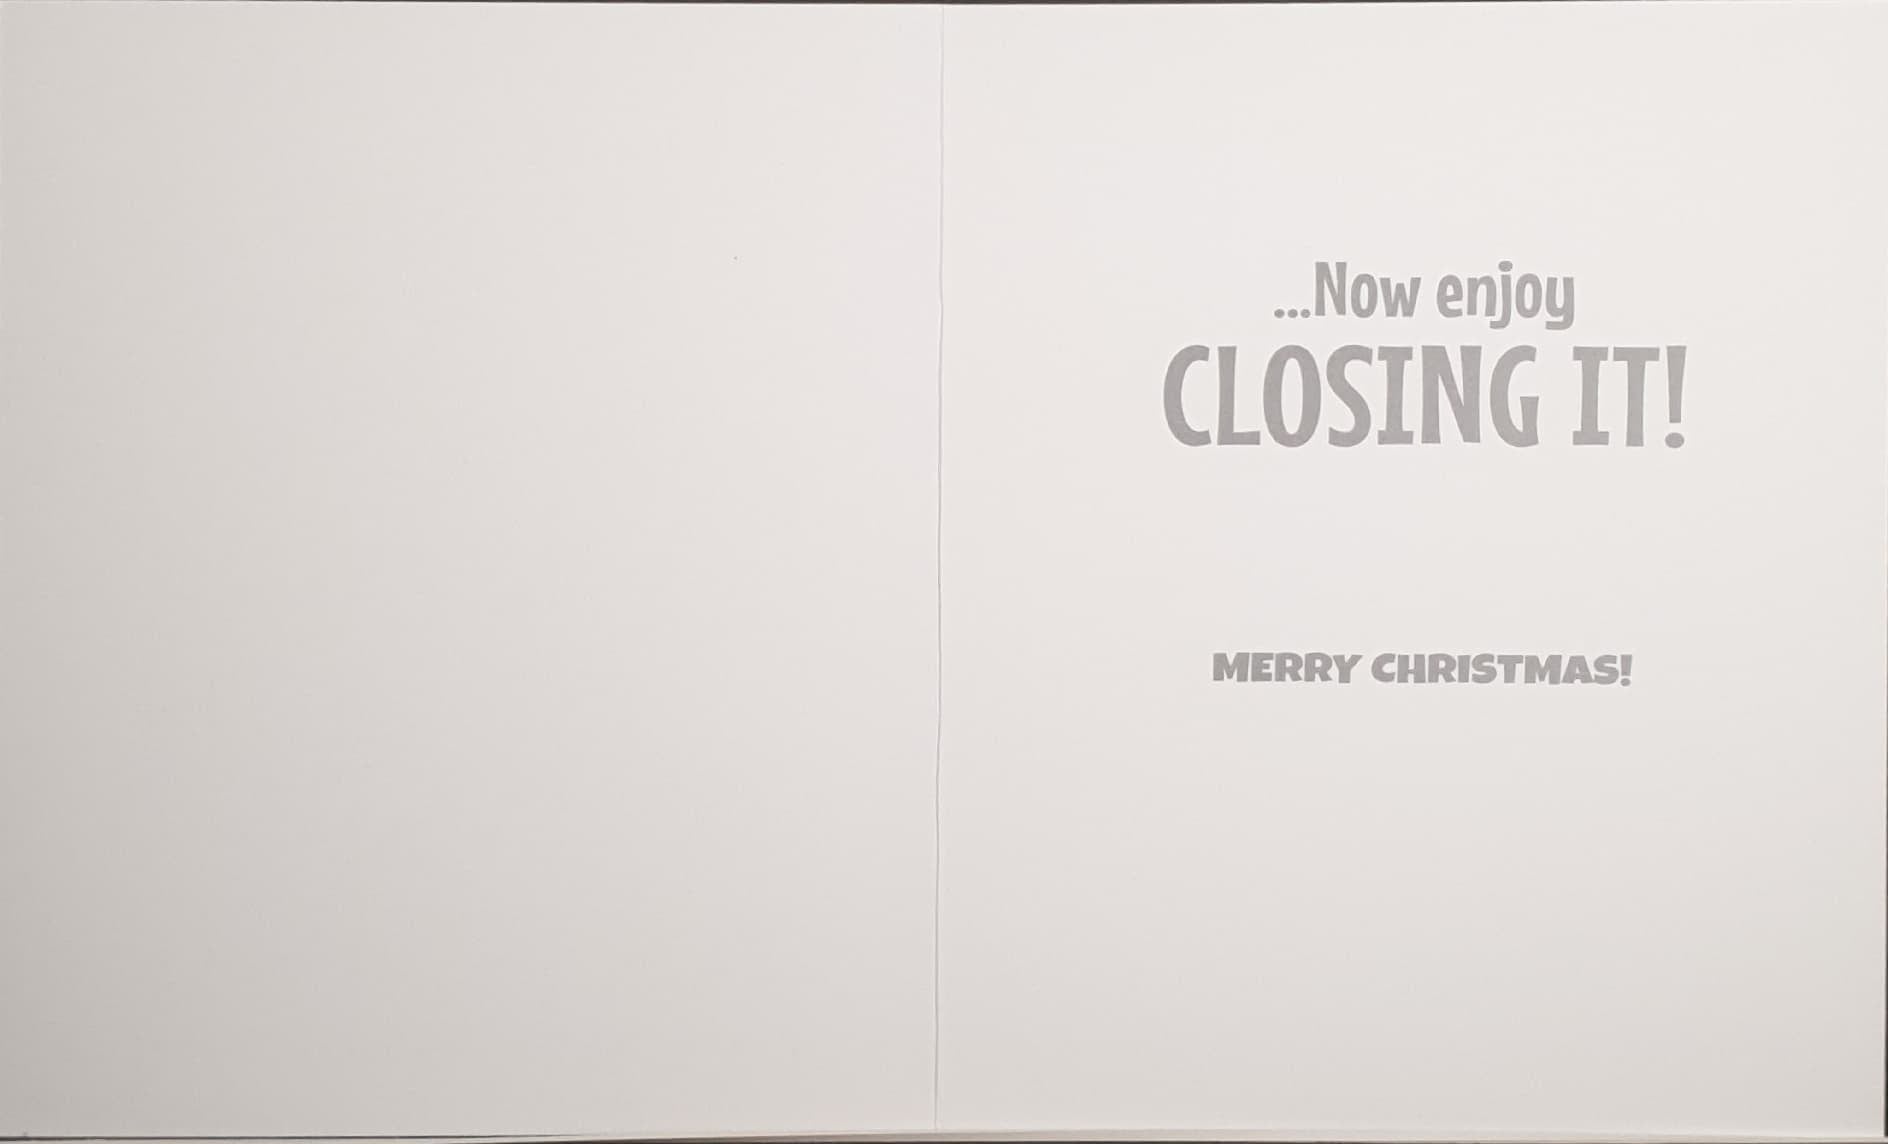 General Christmas Card